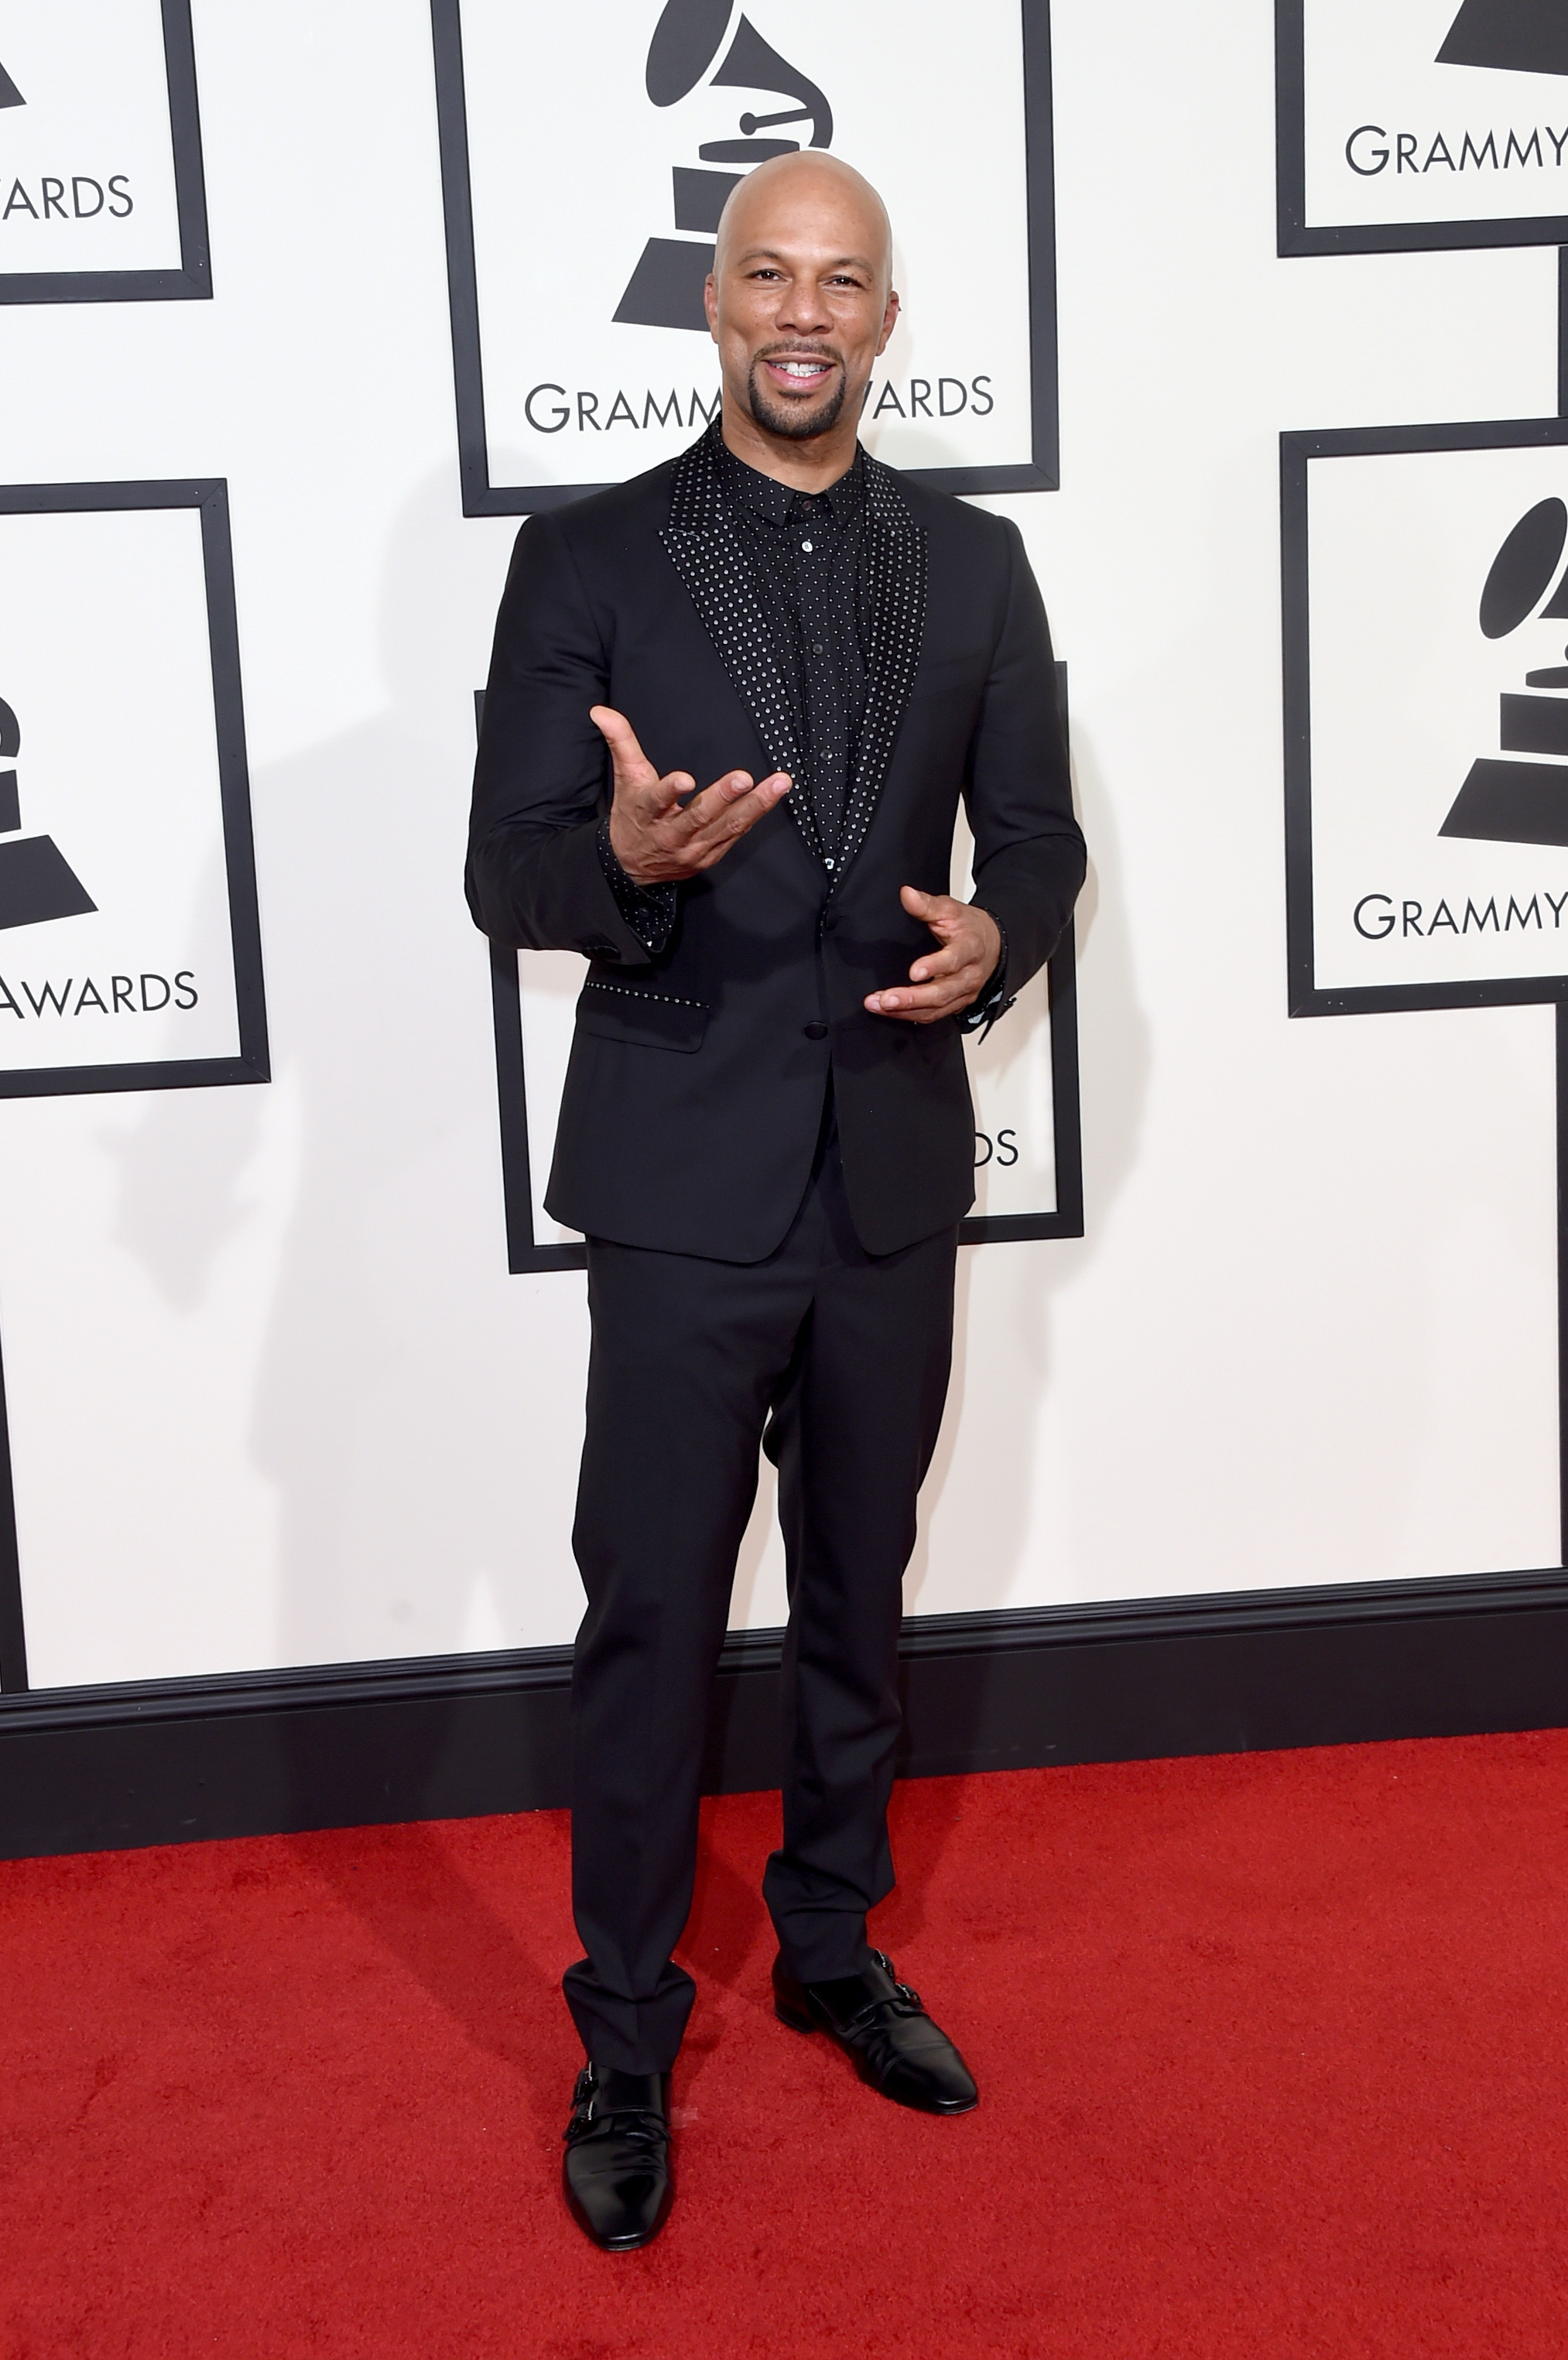 Grammys 2016: Celebrity Red Carpet Photos | Time